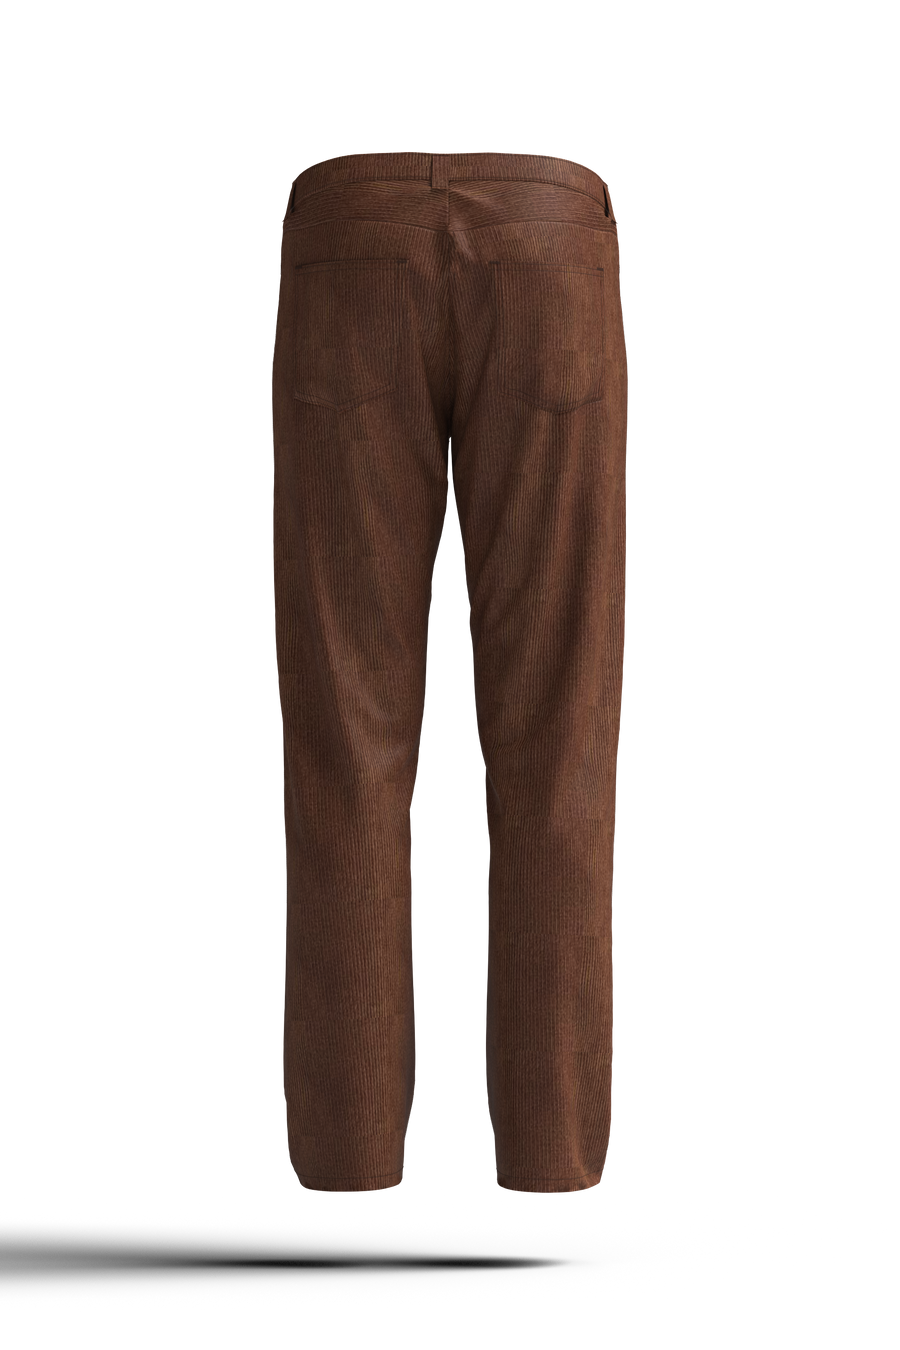 Custom Low-Rise Straight Fit Men's Pants in Velvet Dark Brown